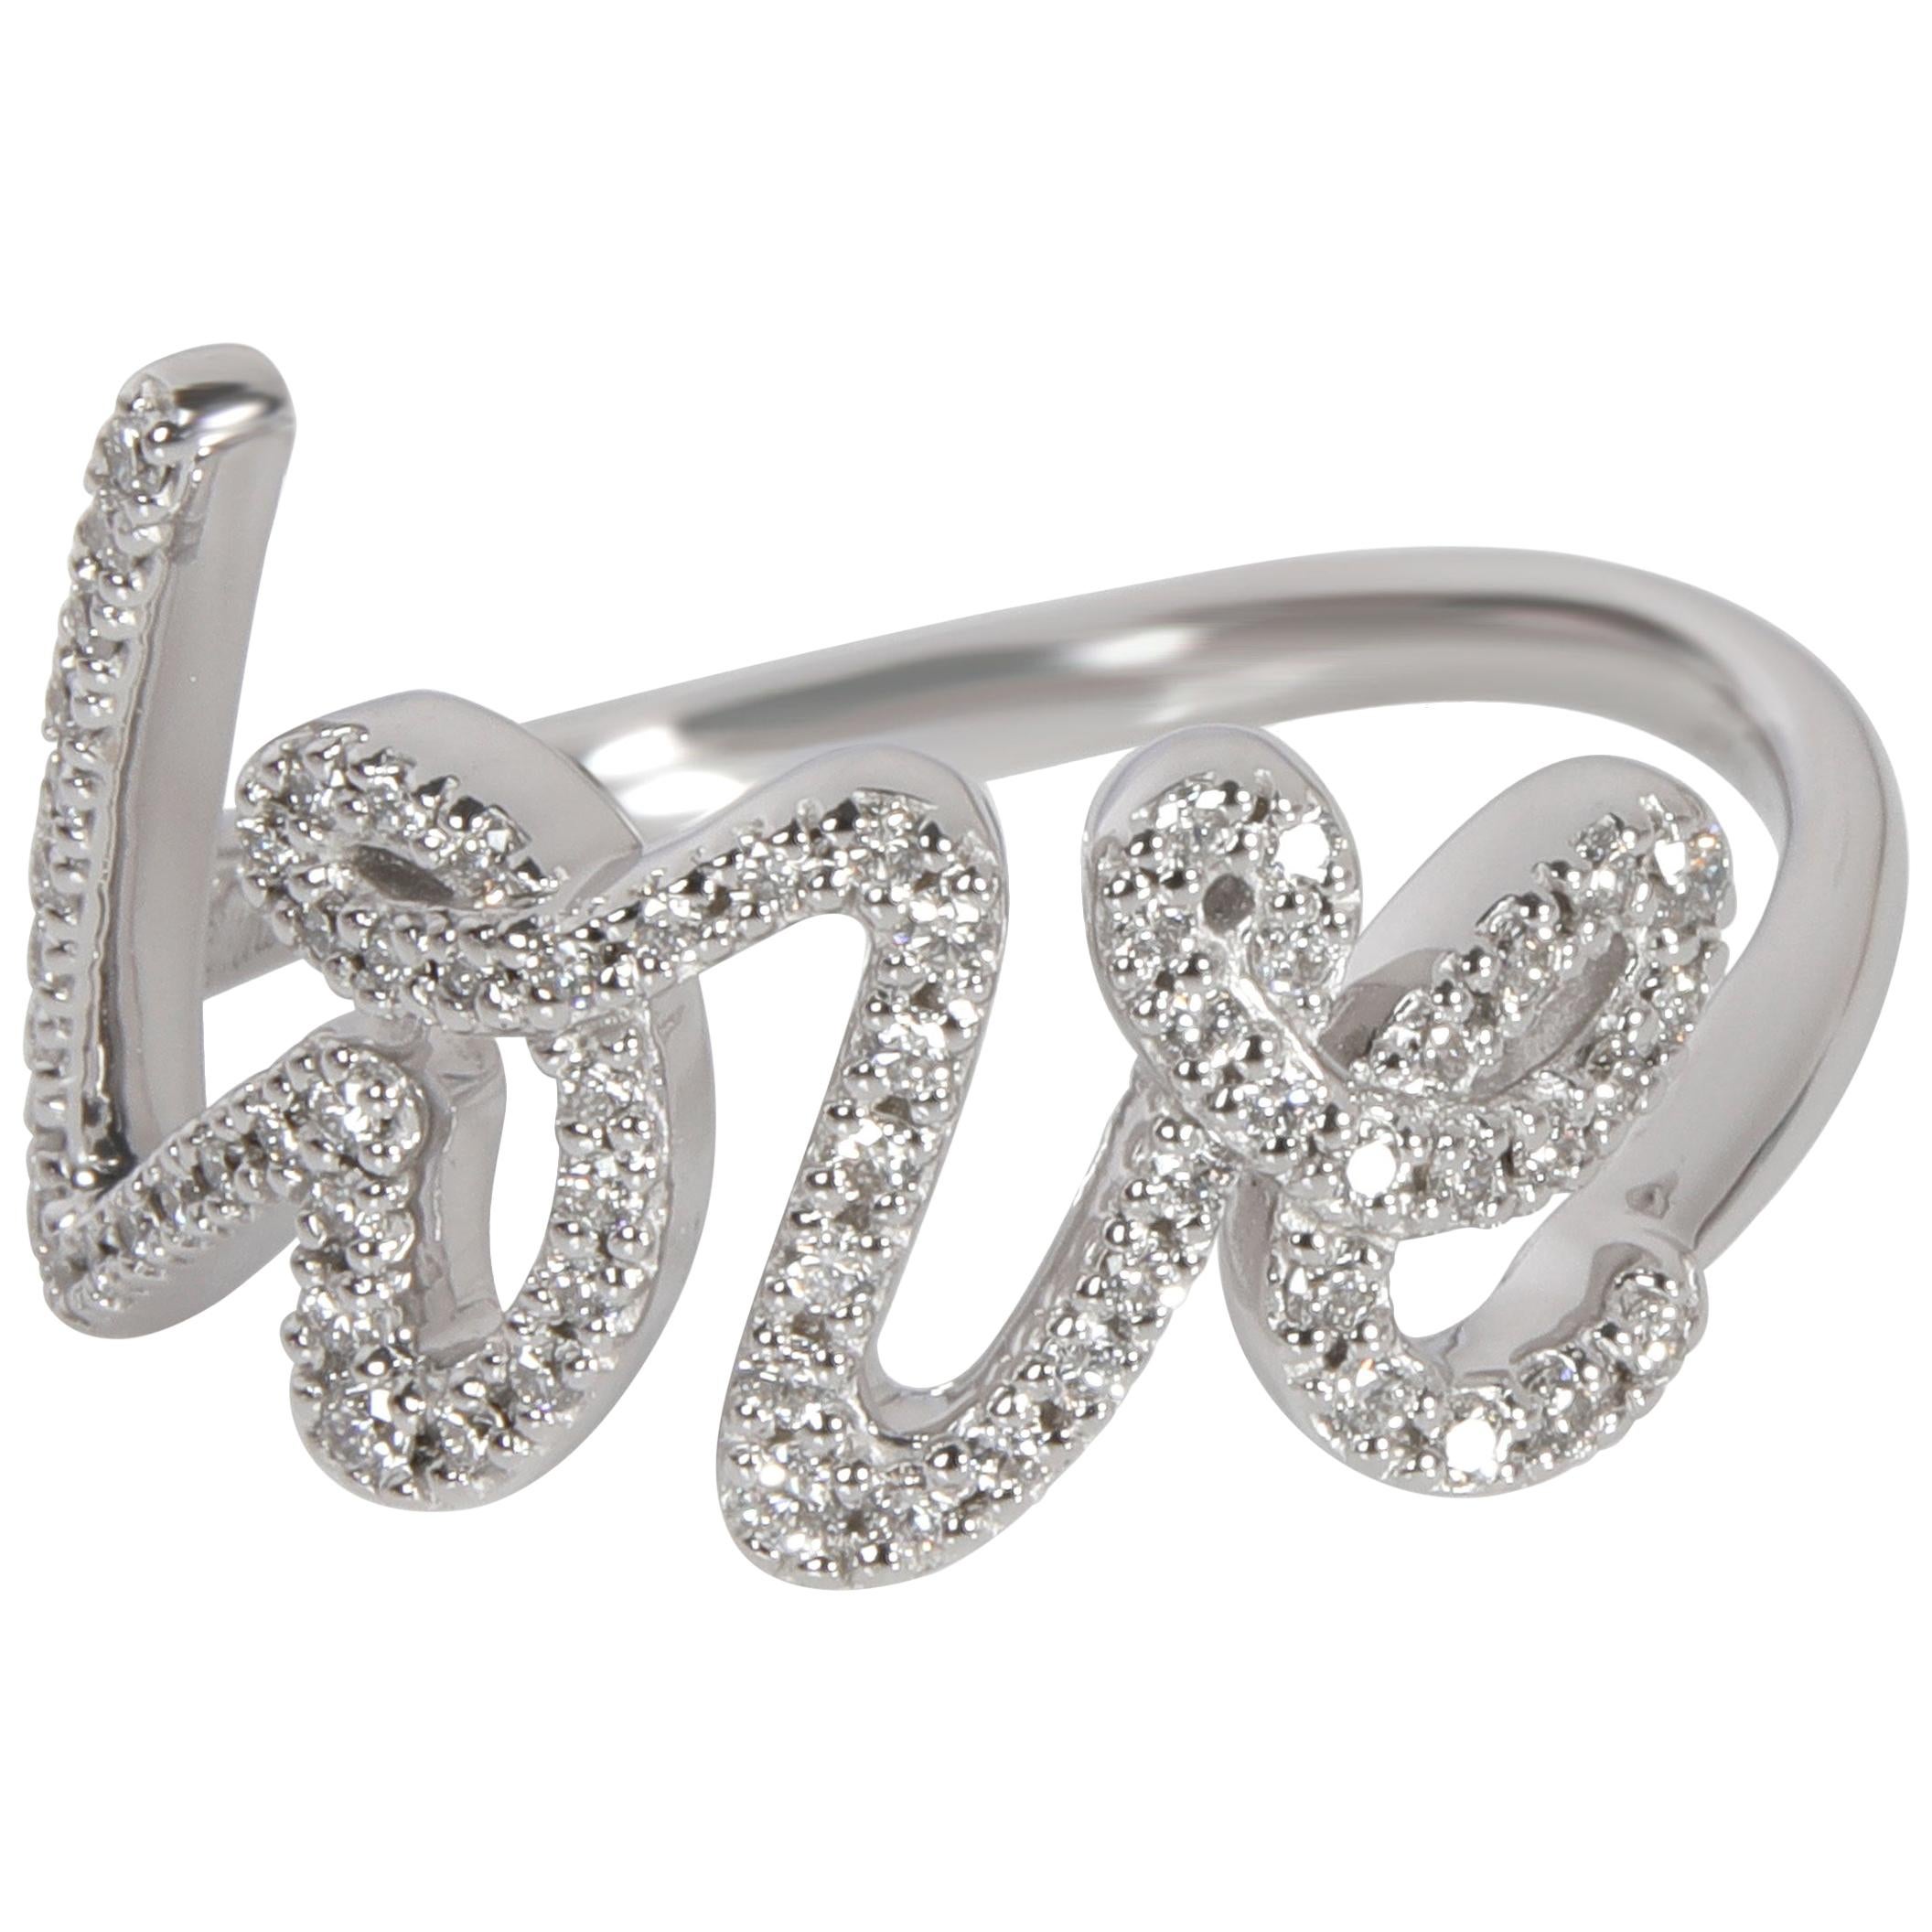 Tiffany & Co. Paloma's Graffiti Diamond Ring in 18 Karat White Gold 0.2 Carat